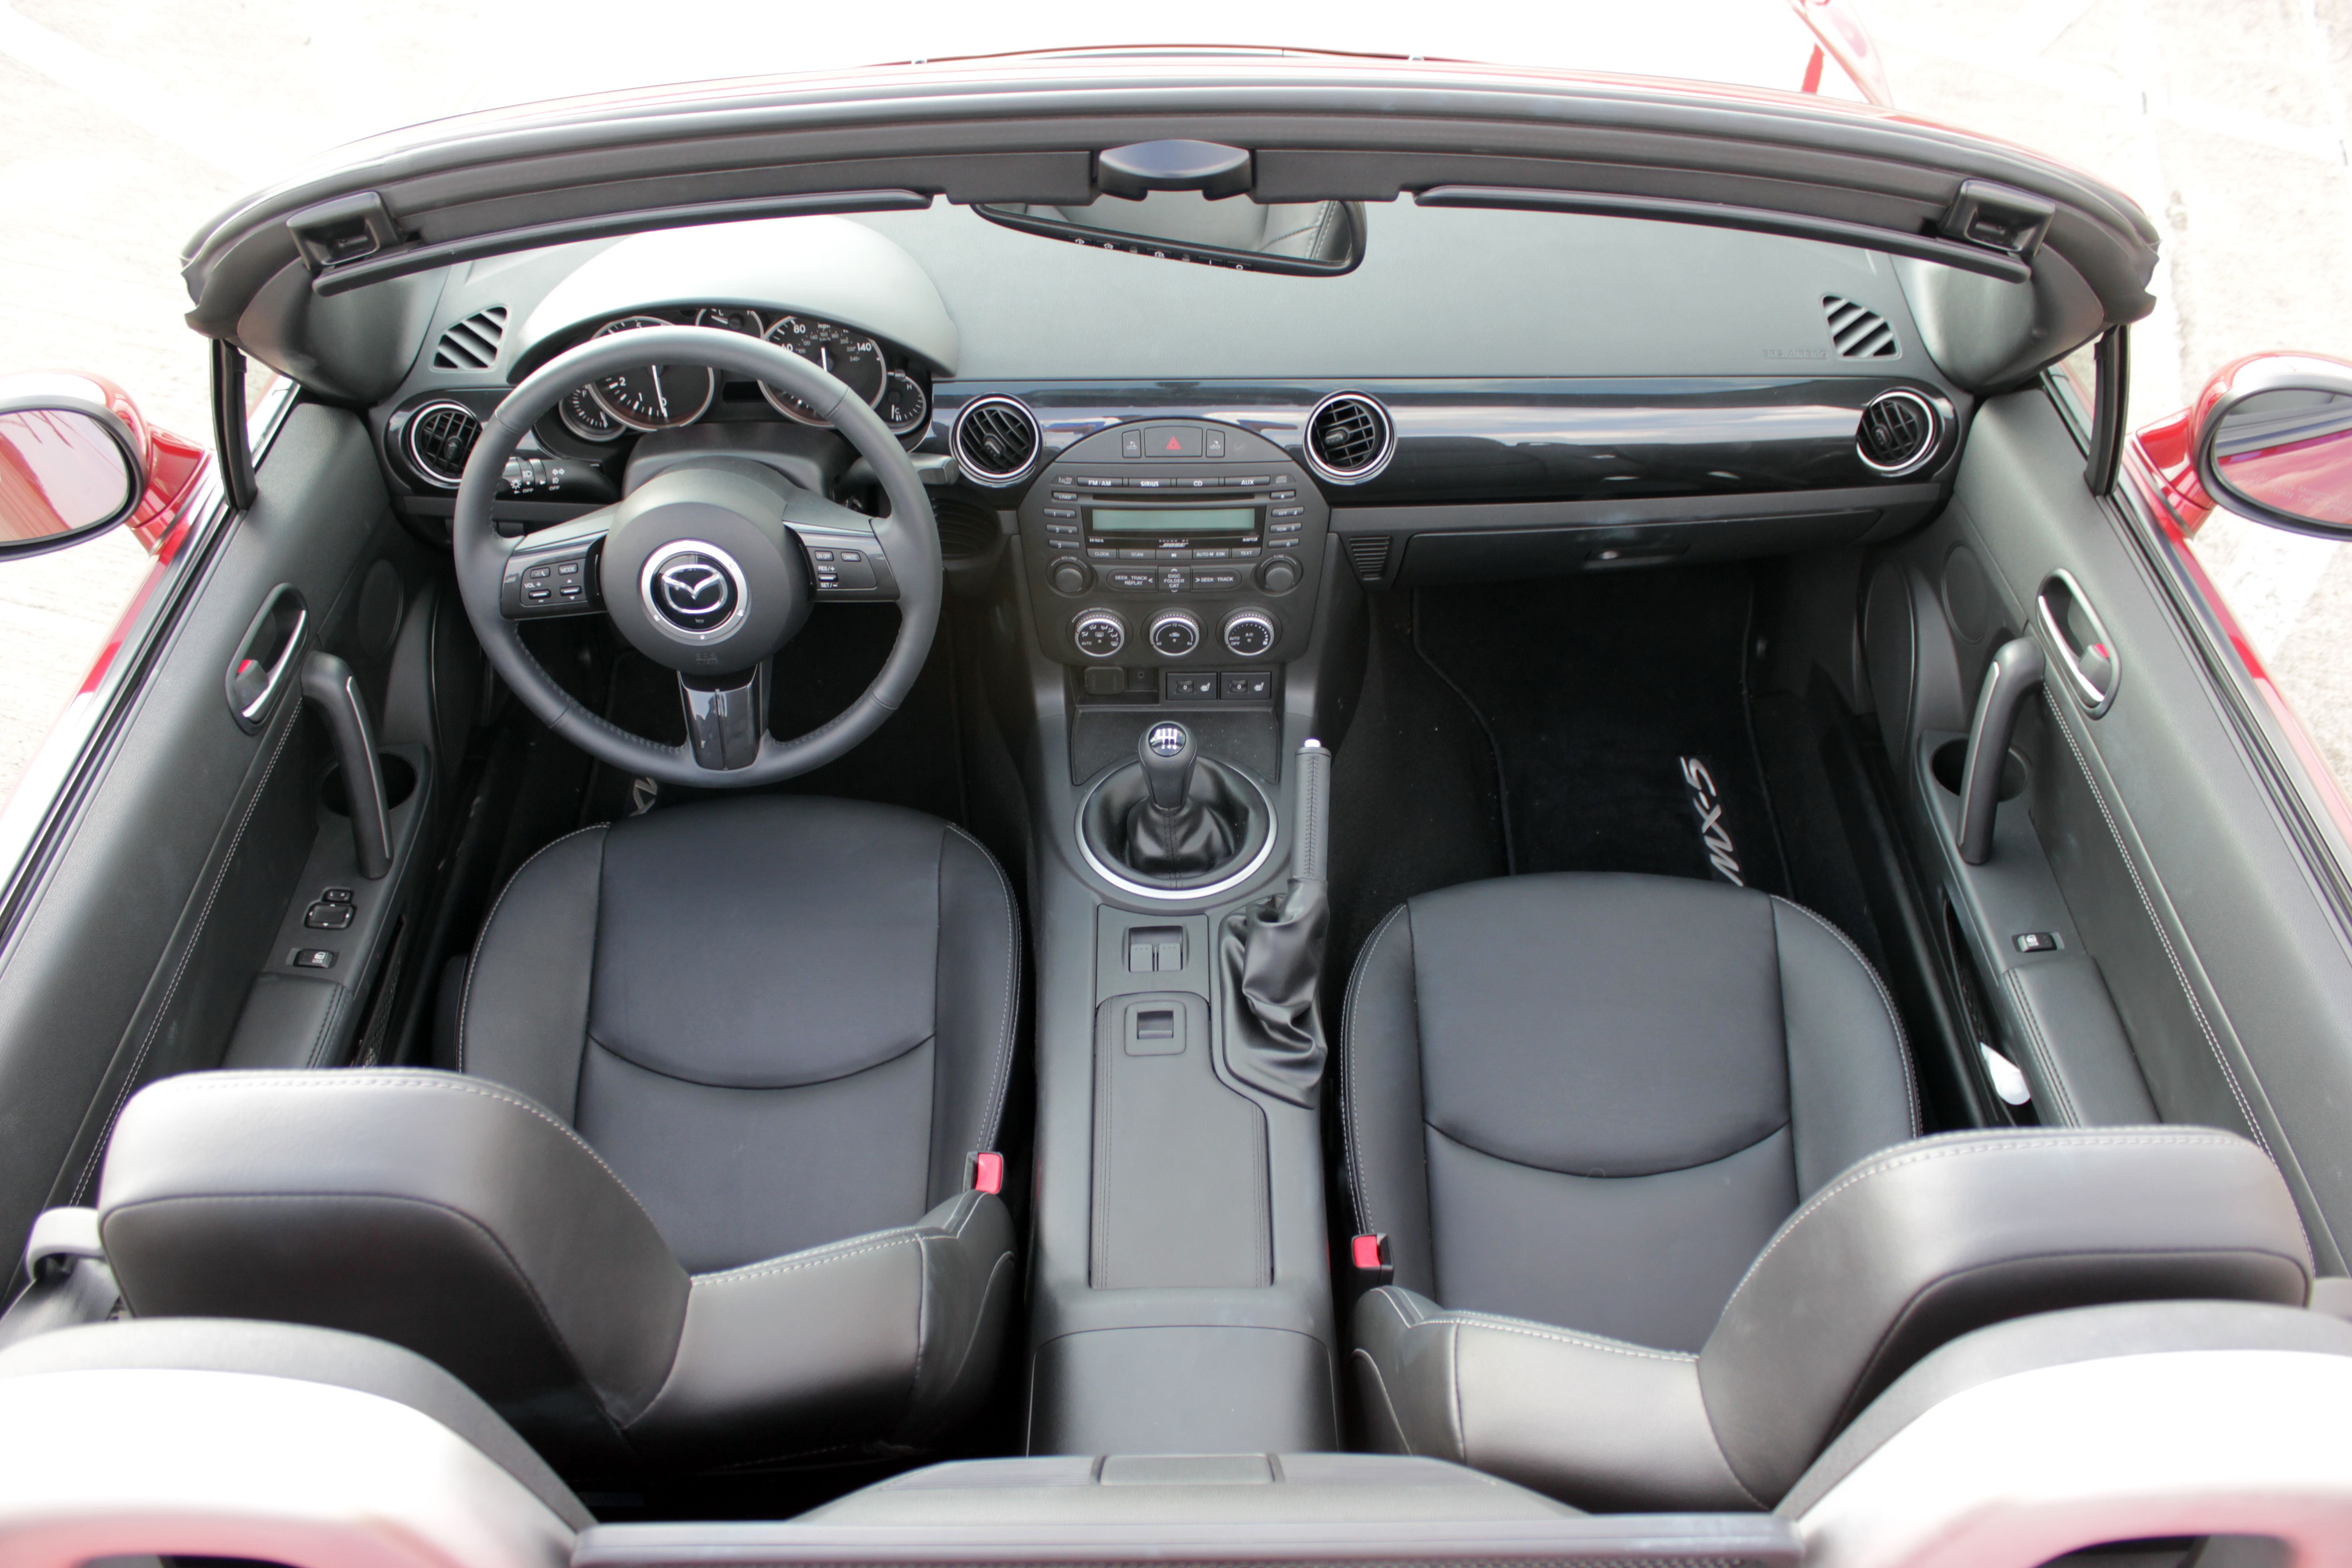 2014 Mazda MX-5 Miata PRHT - Driven